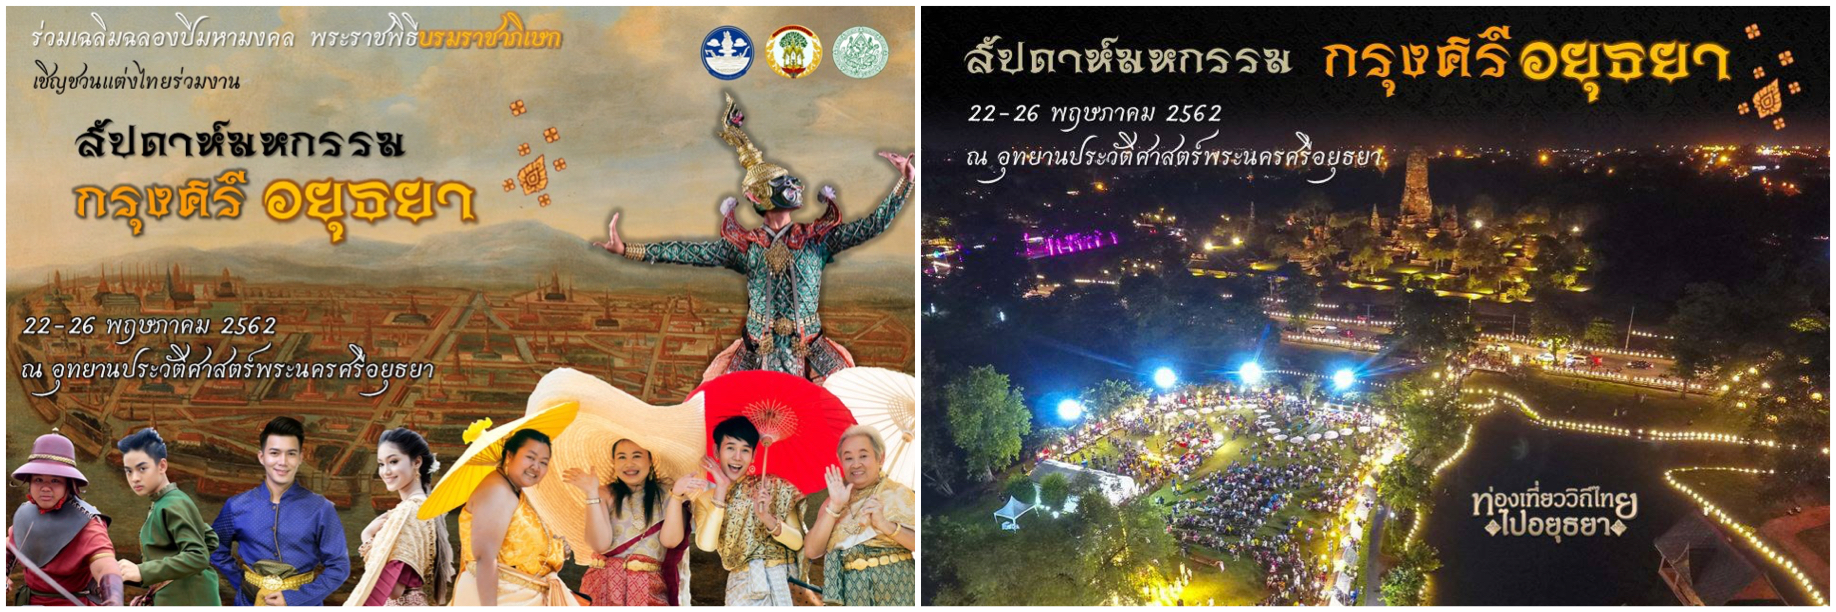 AyutthayaHistoricalFestival2019Montage2